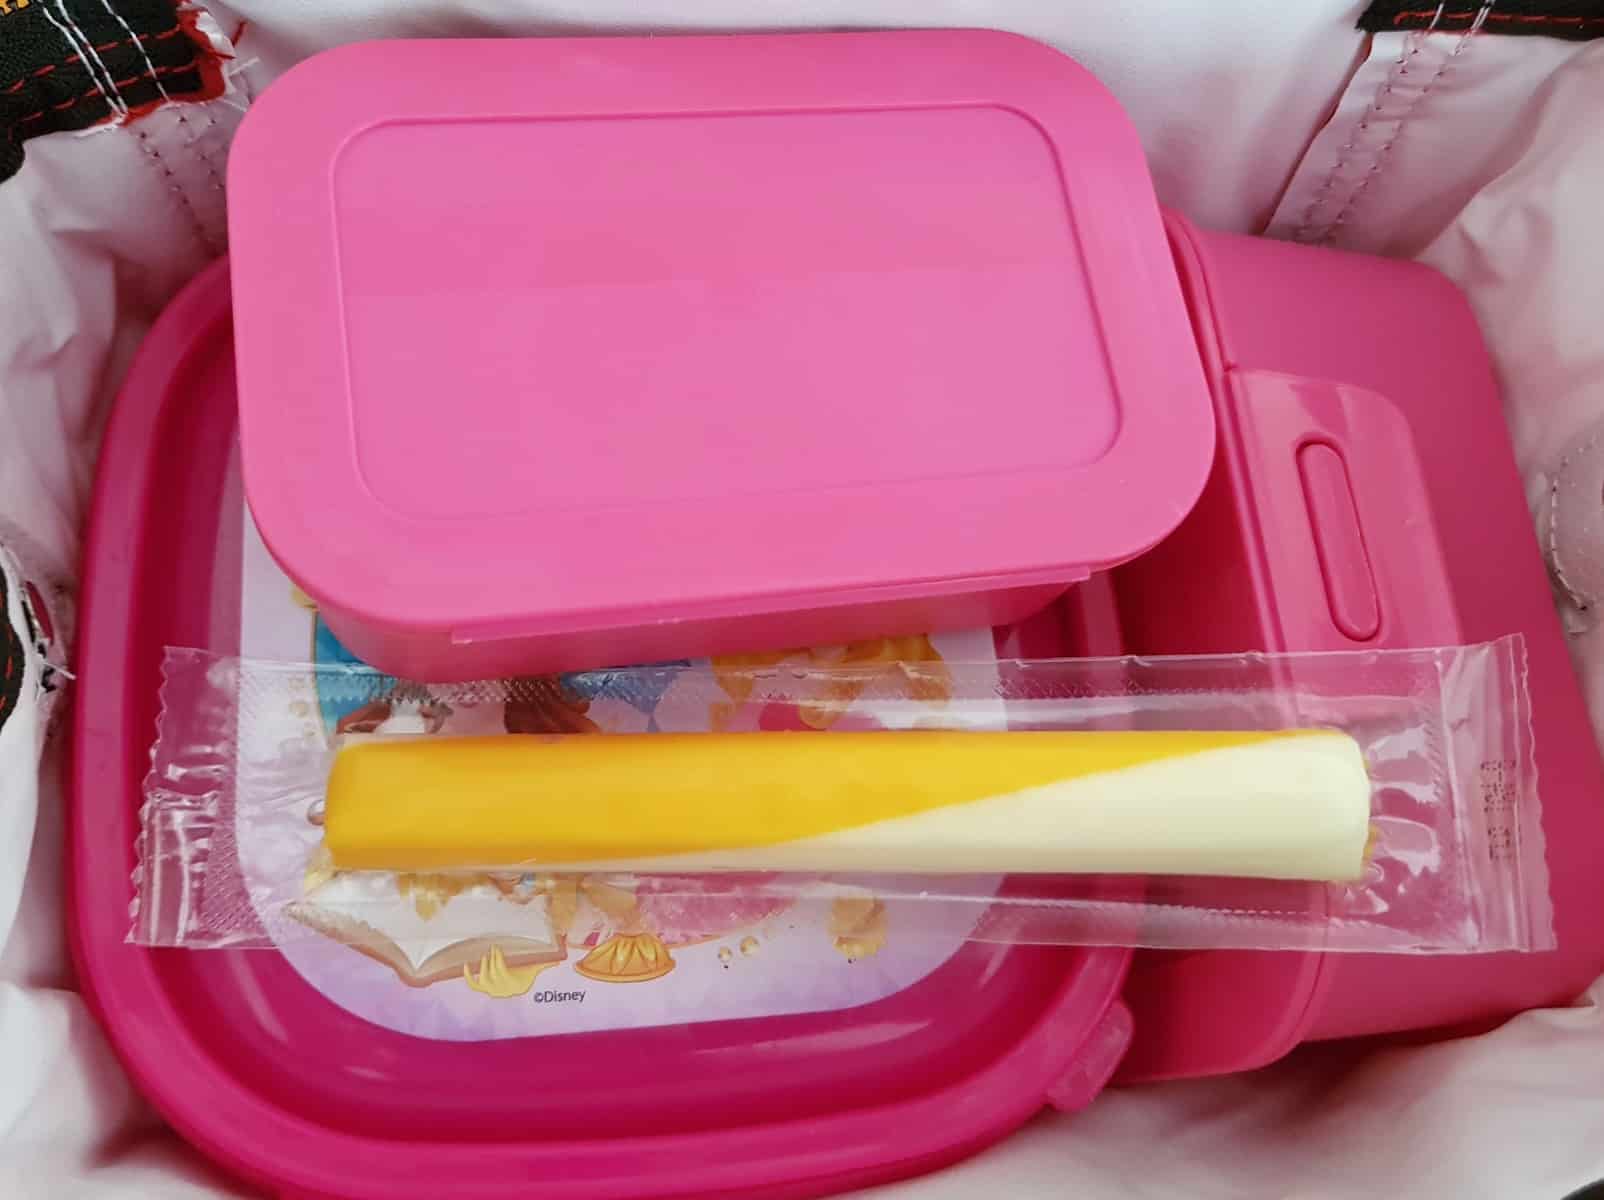 Pik-Nik cheese sticks in a lunchbox